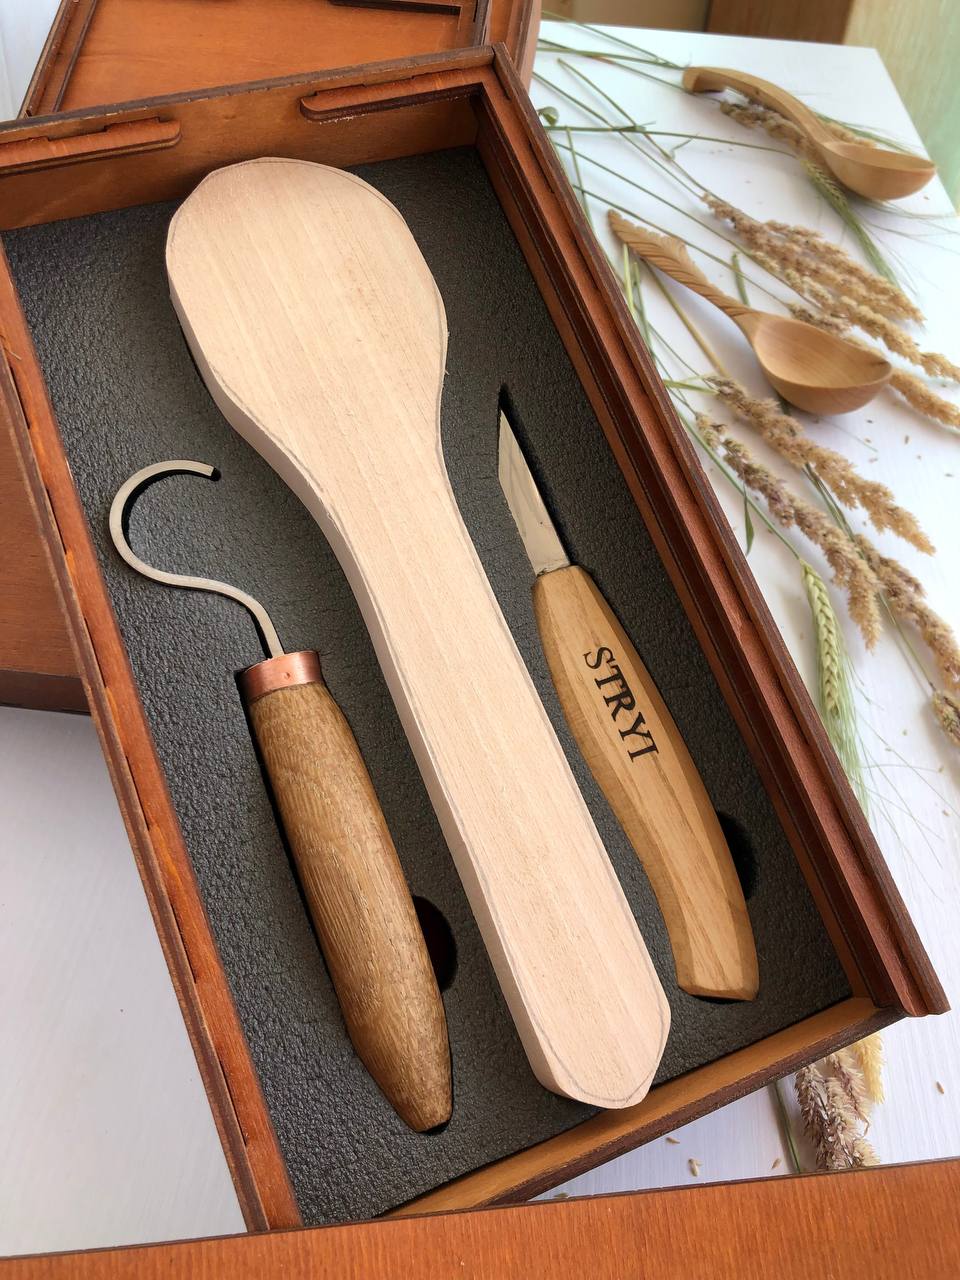 19 Pcs Wood Carving Tools Kit Knifies Set Spoon Carving Blanks